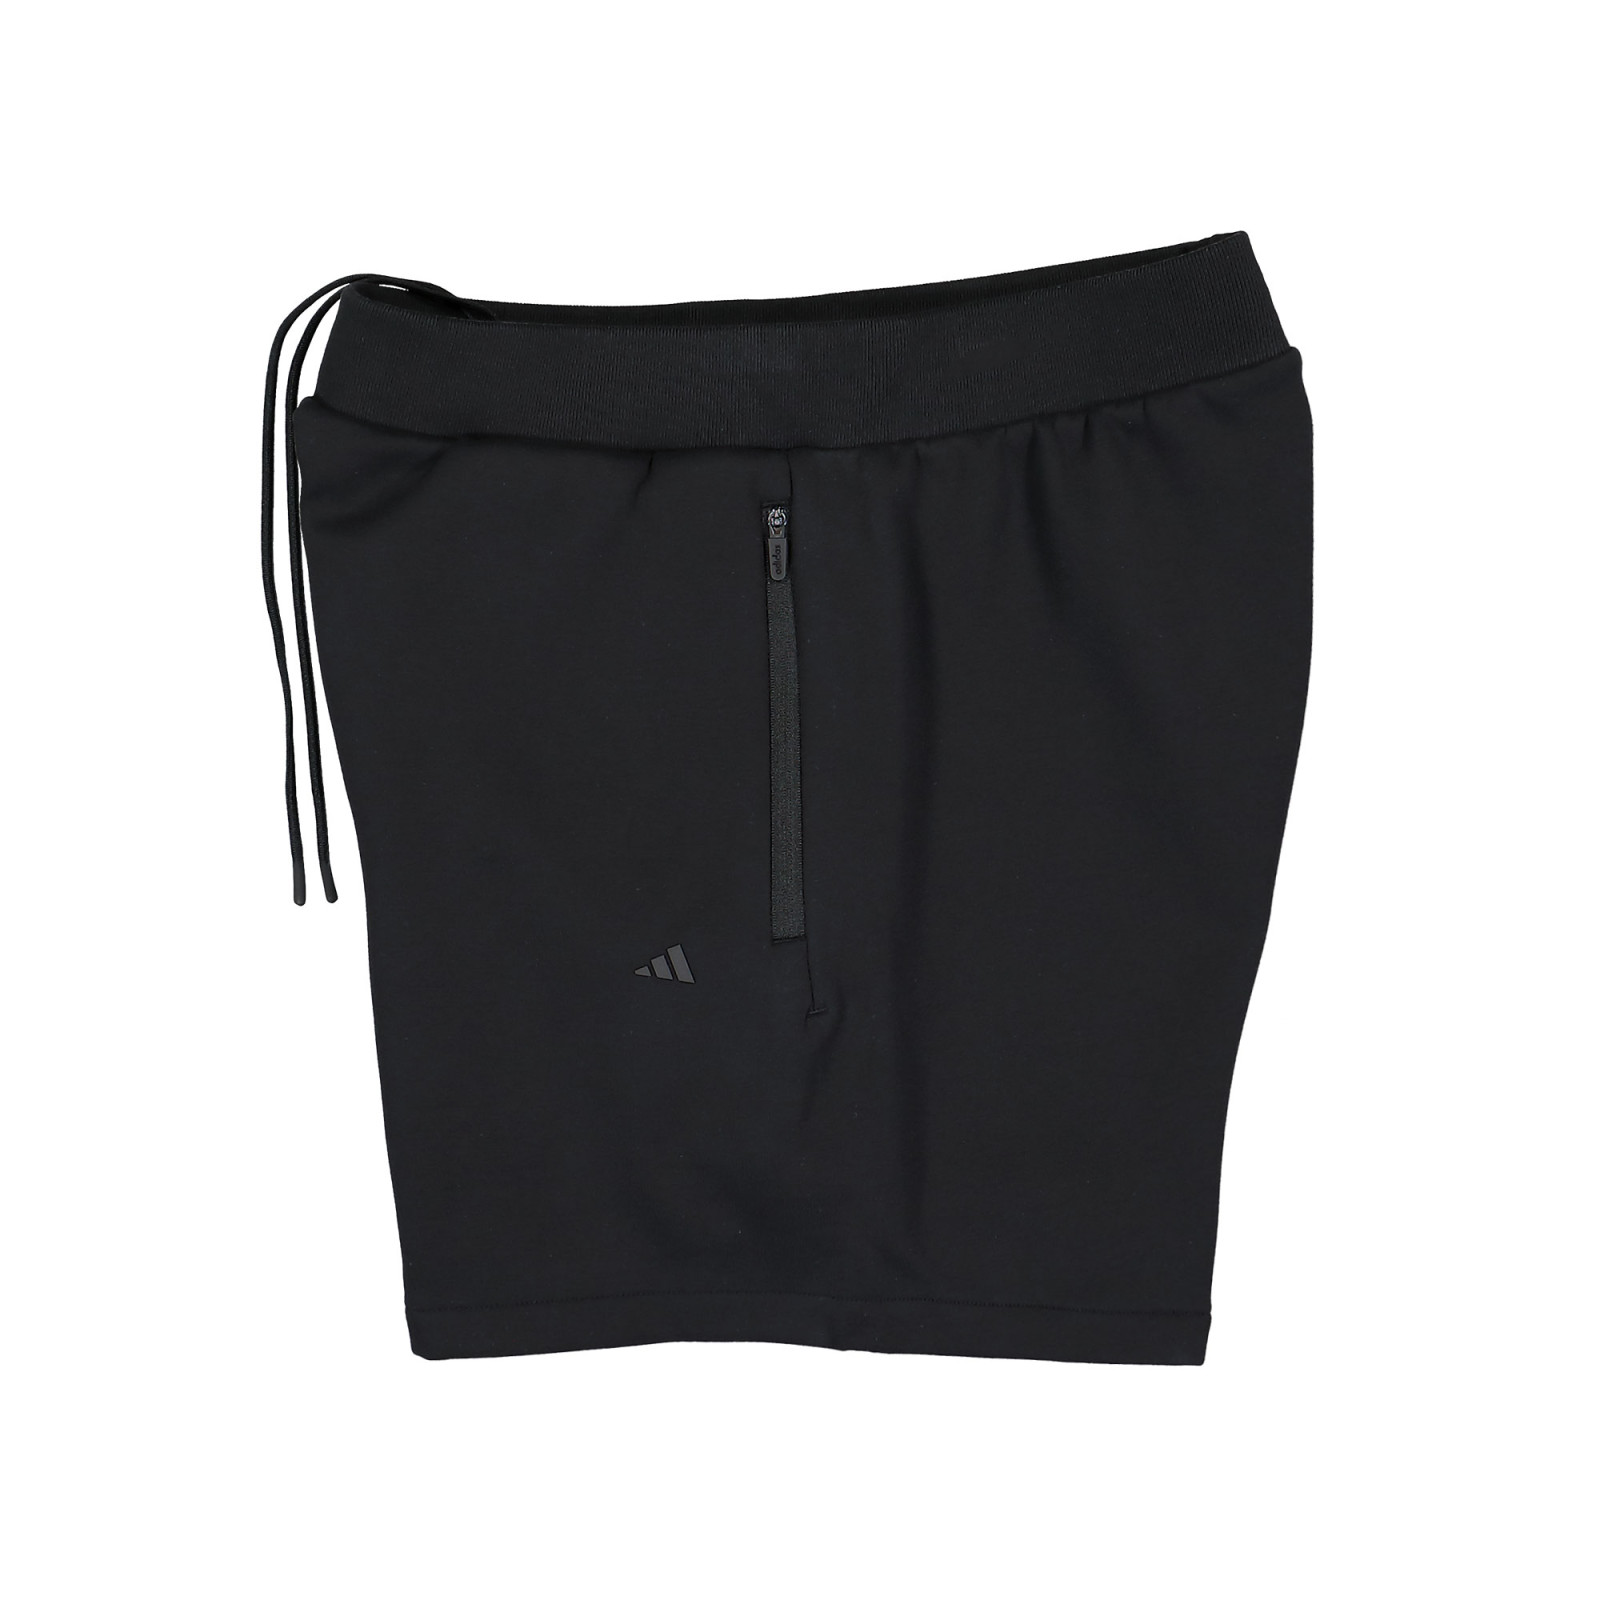 Adidas One Basketball
Fleece Short Black